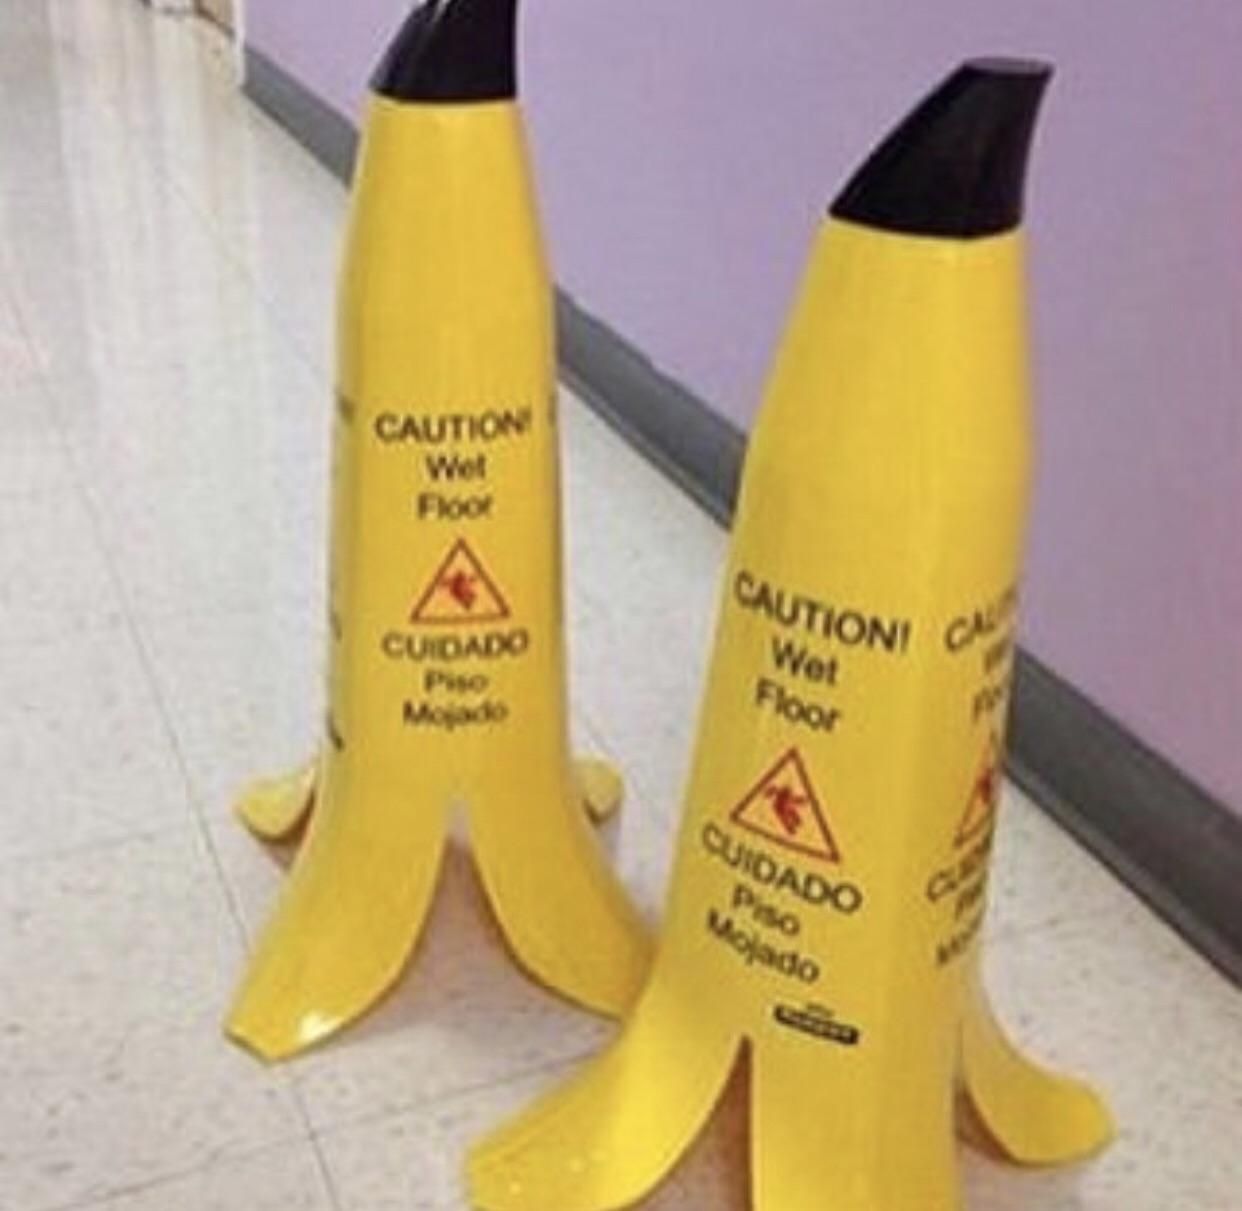 Banana shaped caution cones